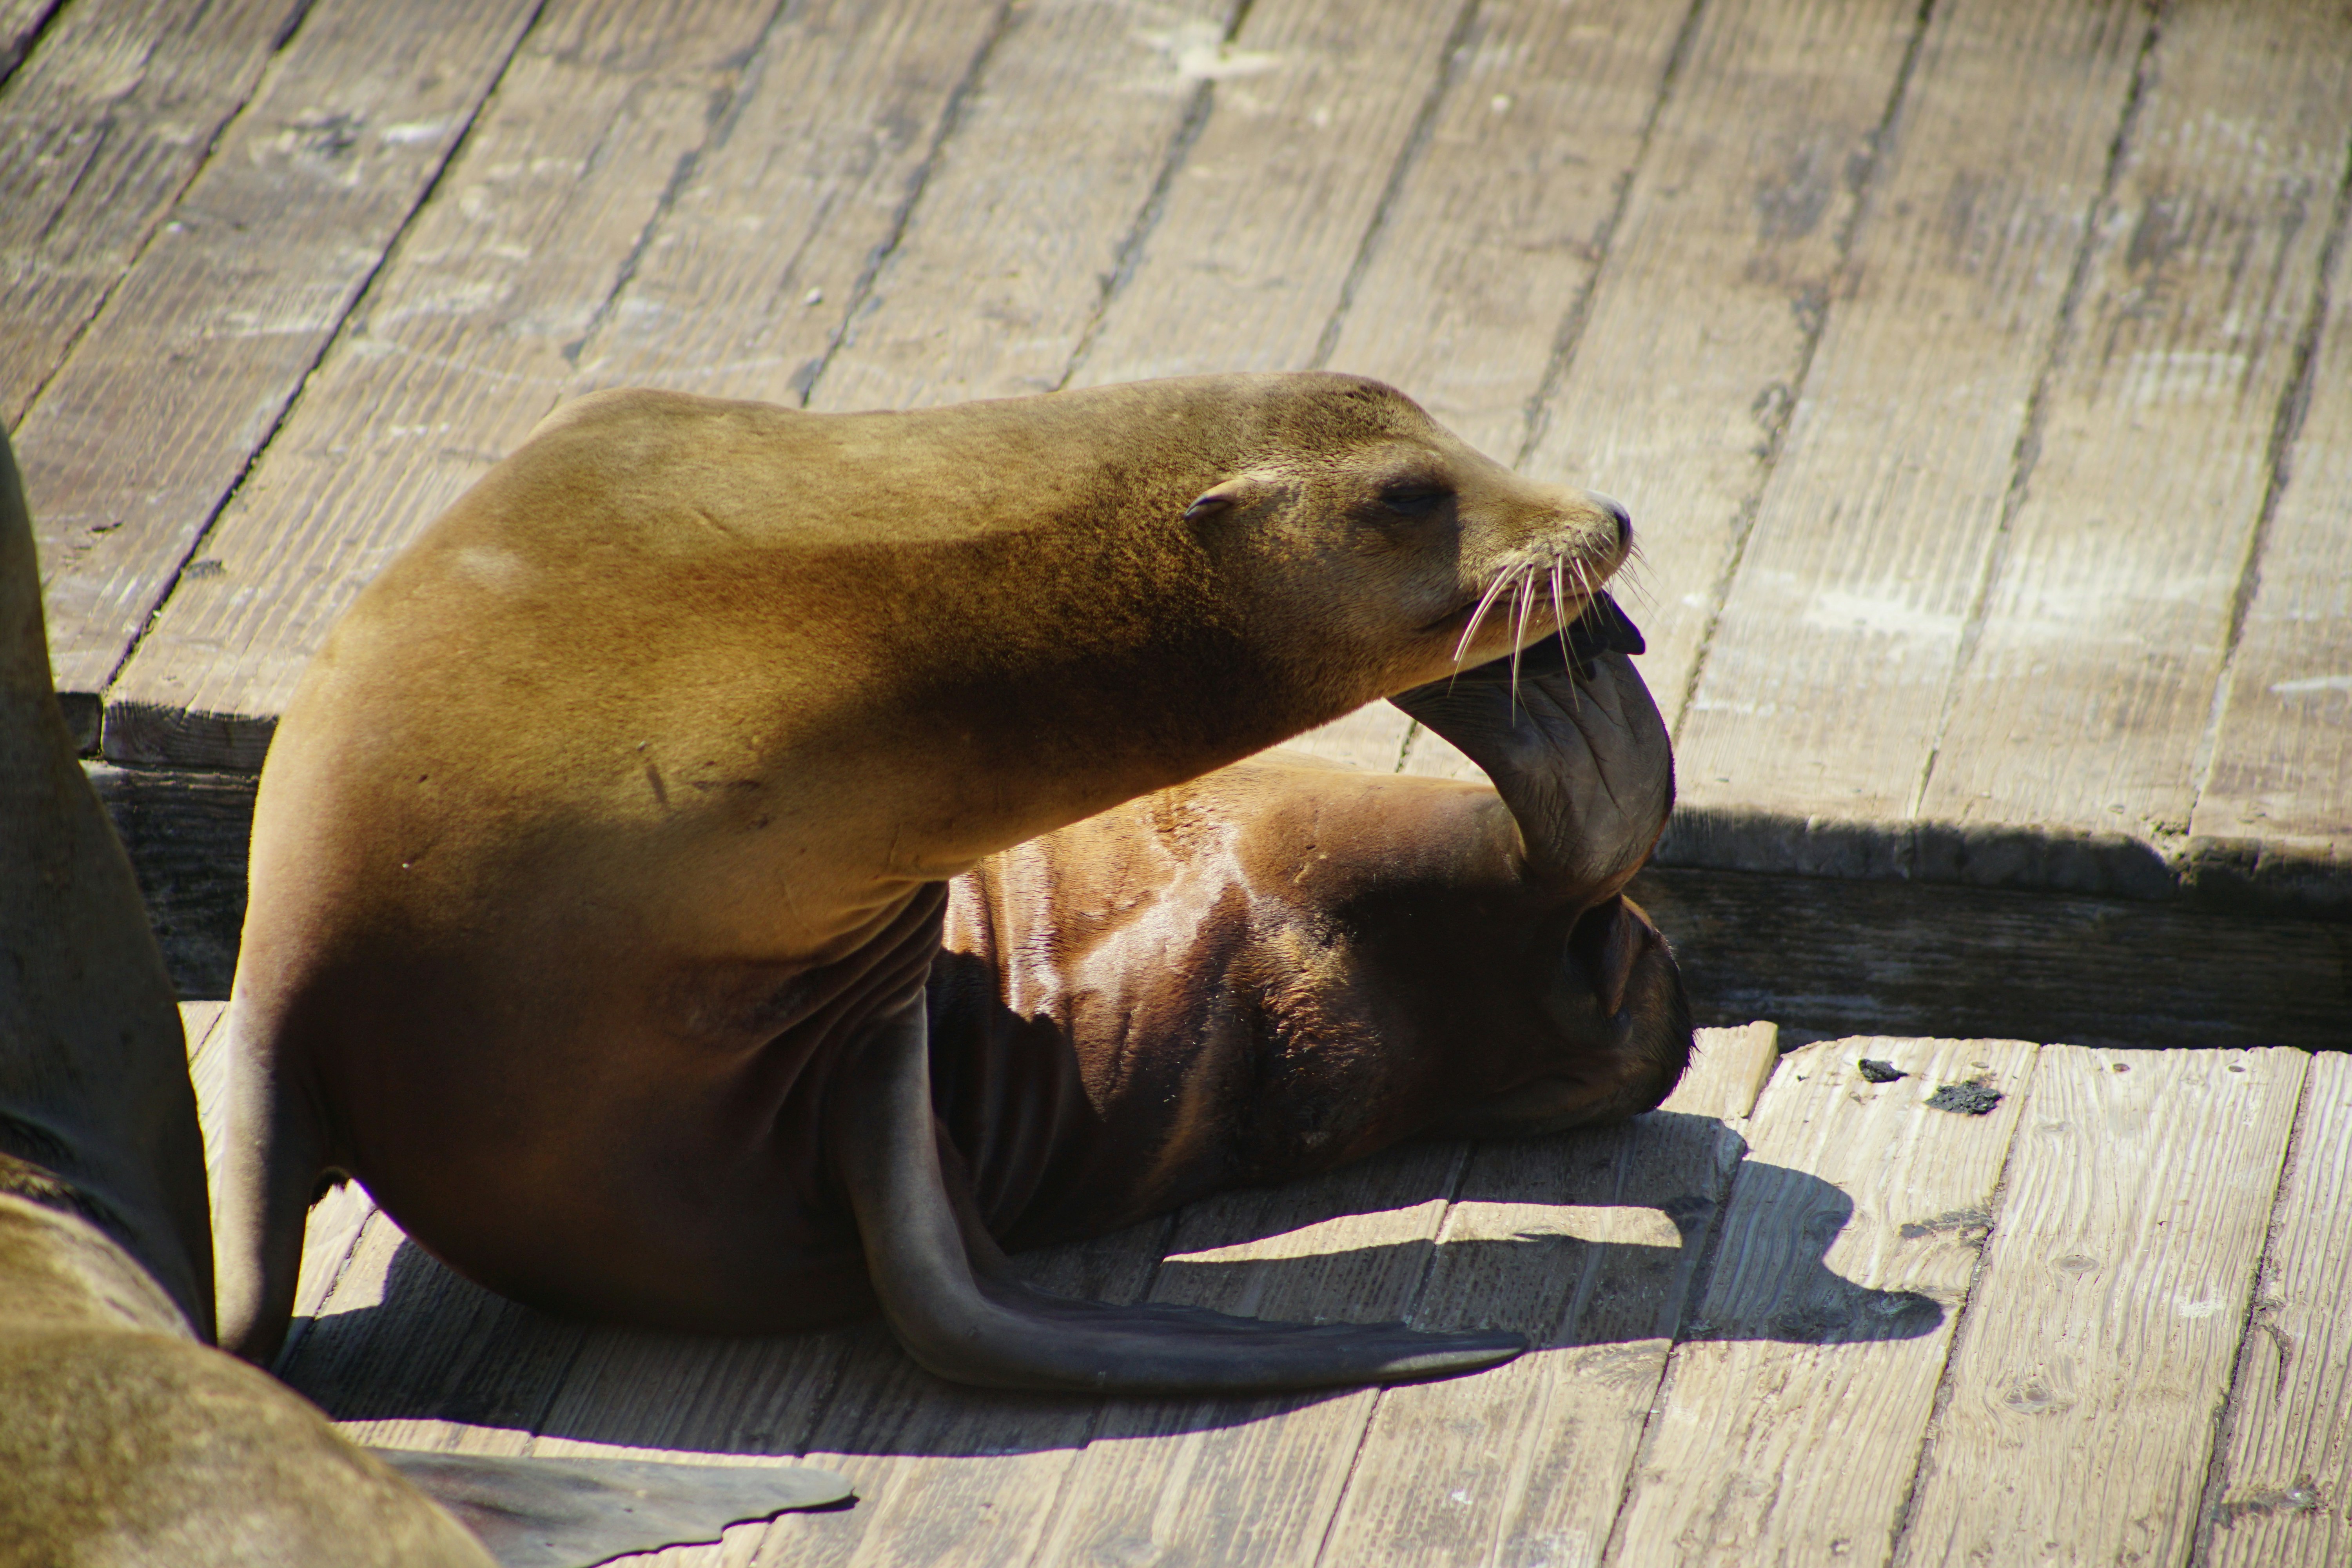 A Seal sun bathing at pier 39 in SF